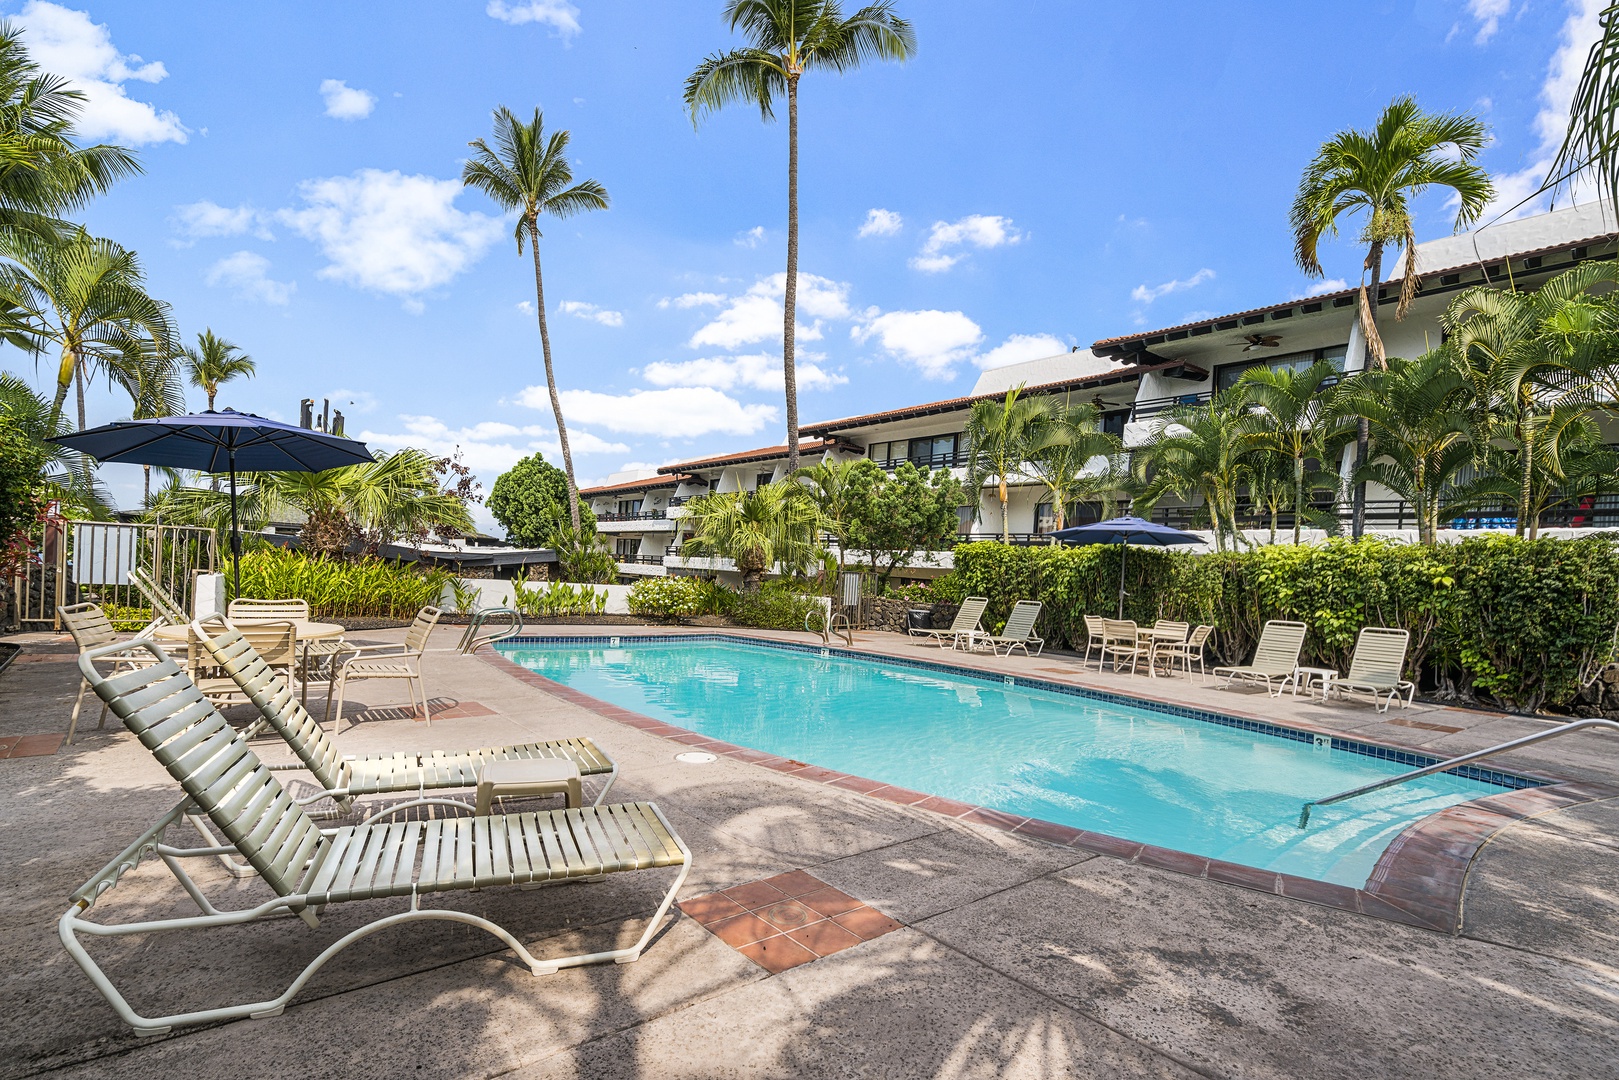 Kailua Kona Vacation Rentals, Casa De Emdeko 222 - Lounge pool side!